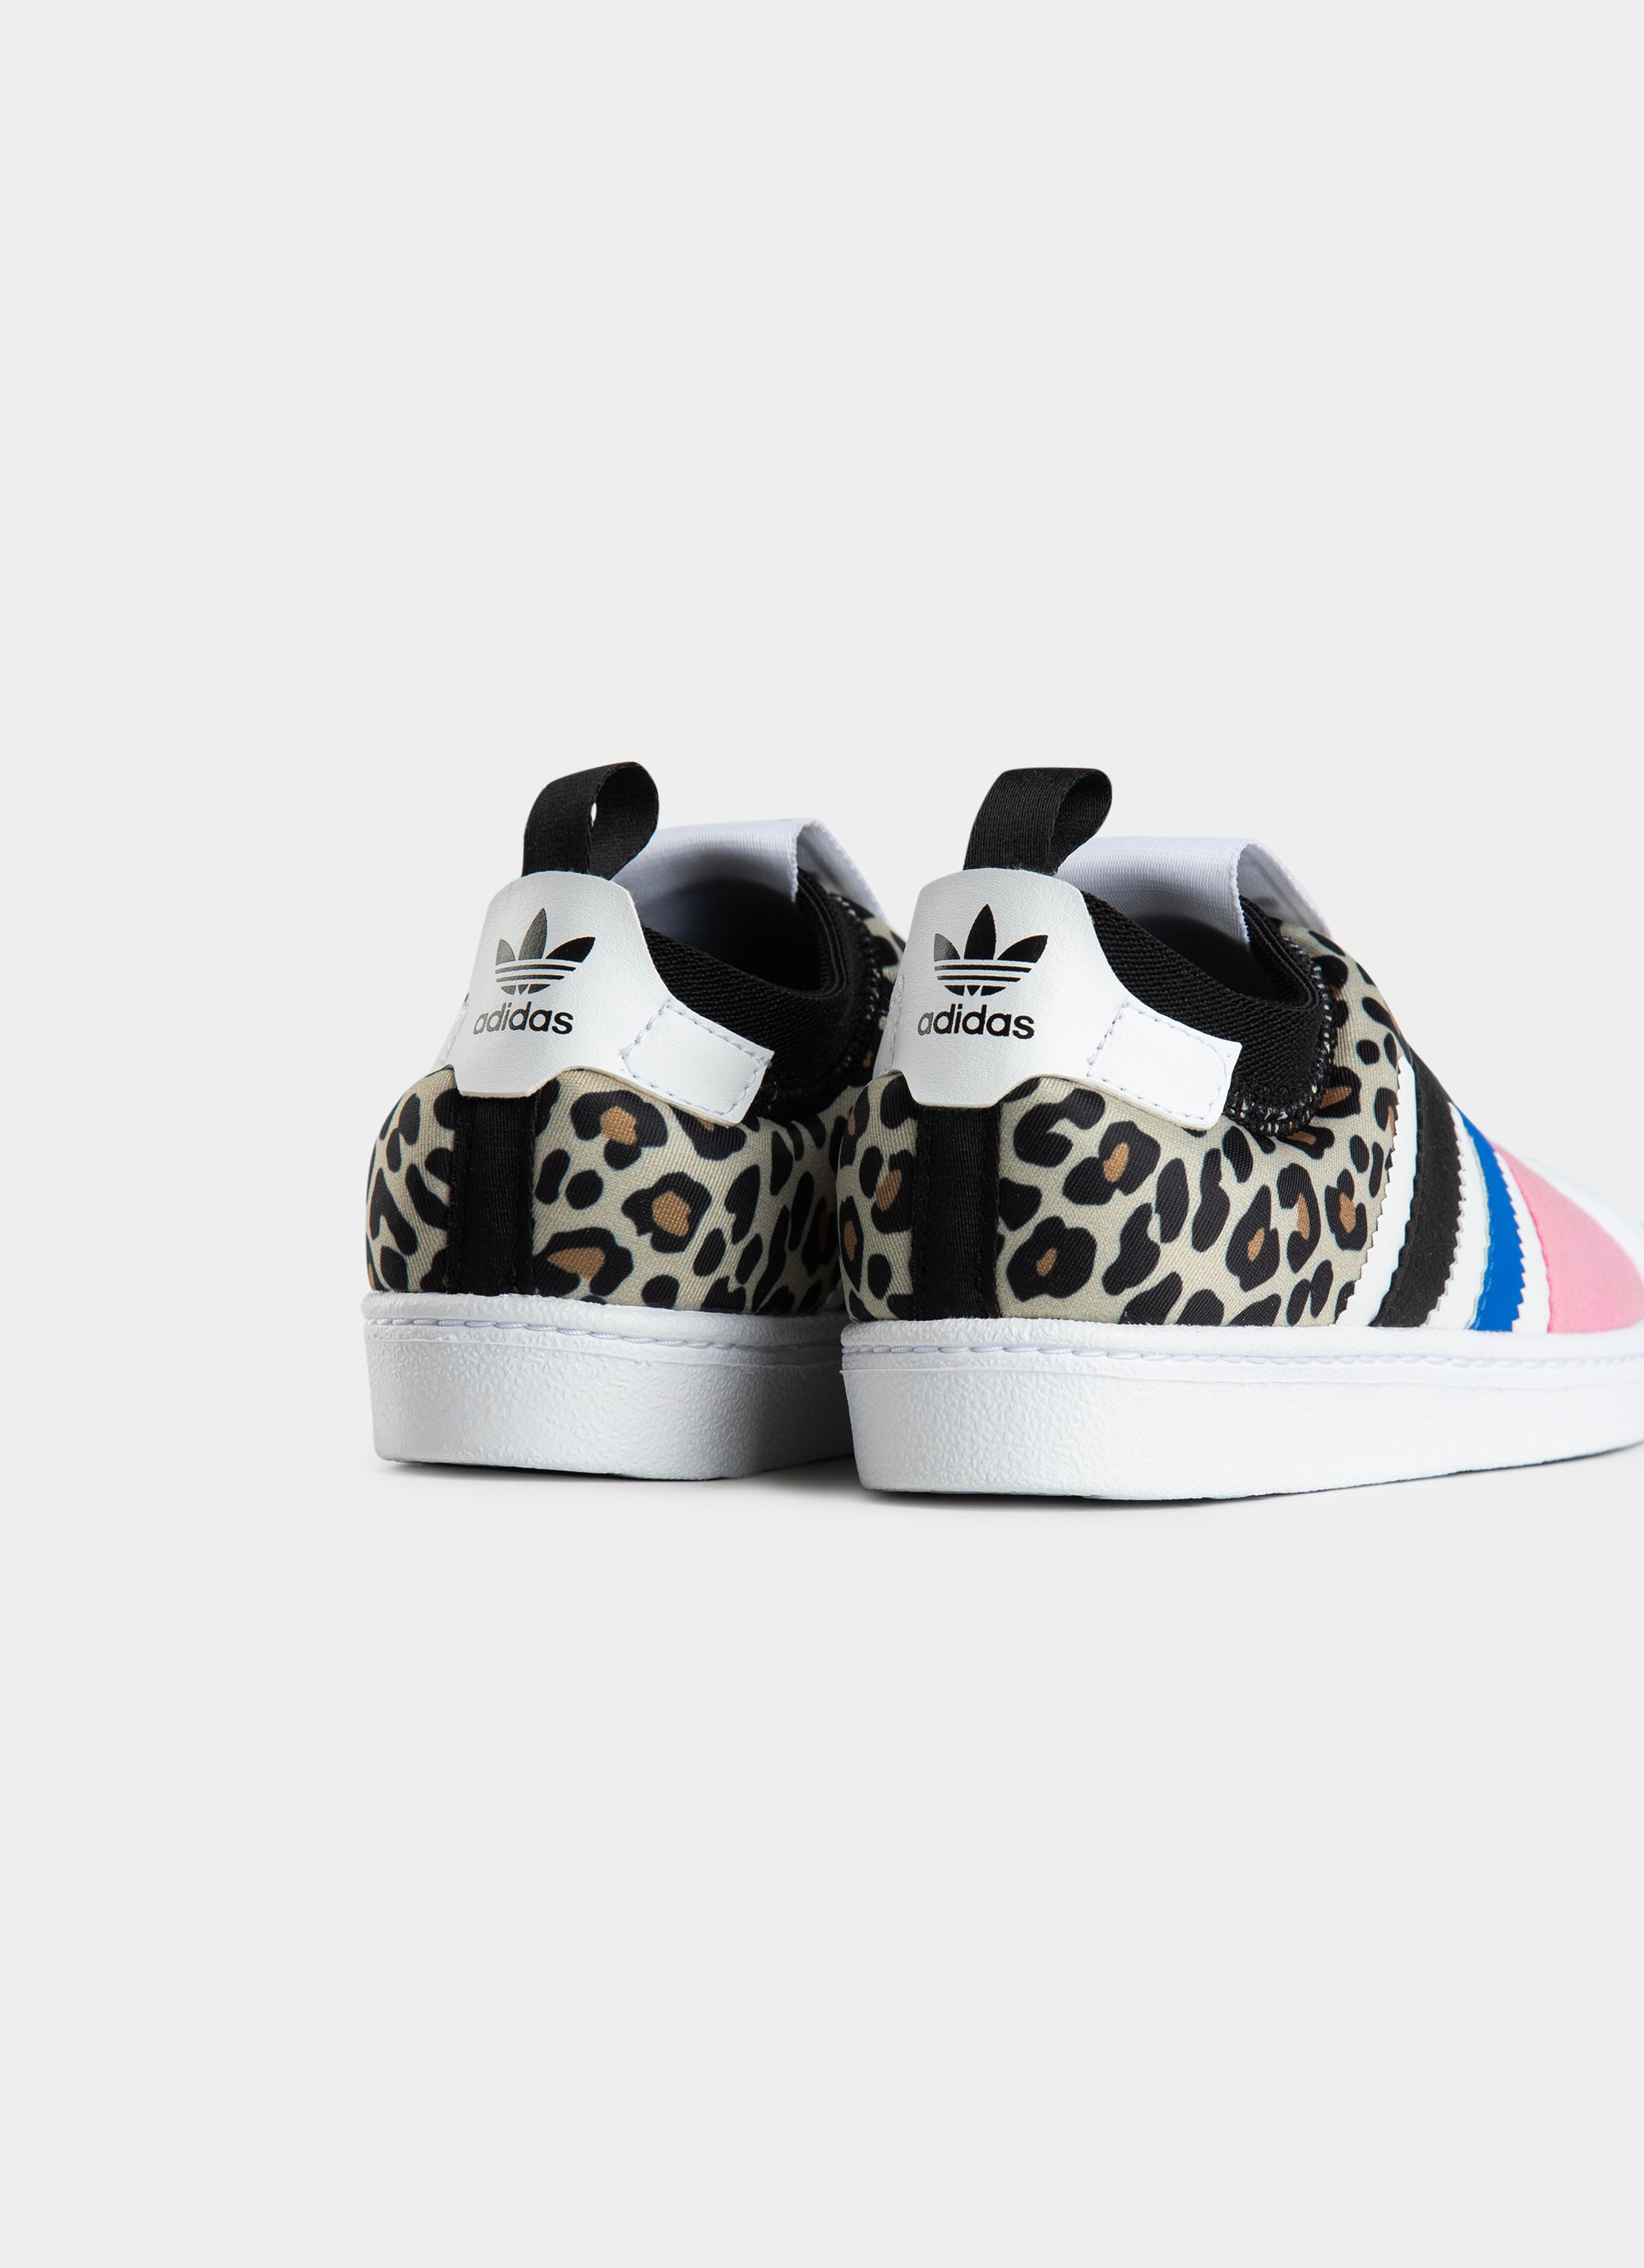 adidas Originals Superstar Leopard Sneaker | Adidas originals superstar, Leopard  sneakers, Sneakers